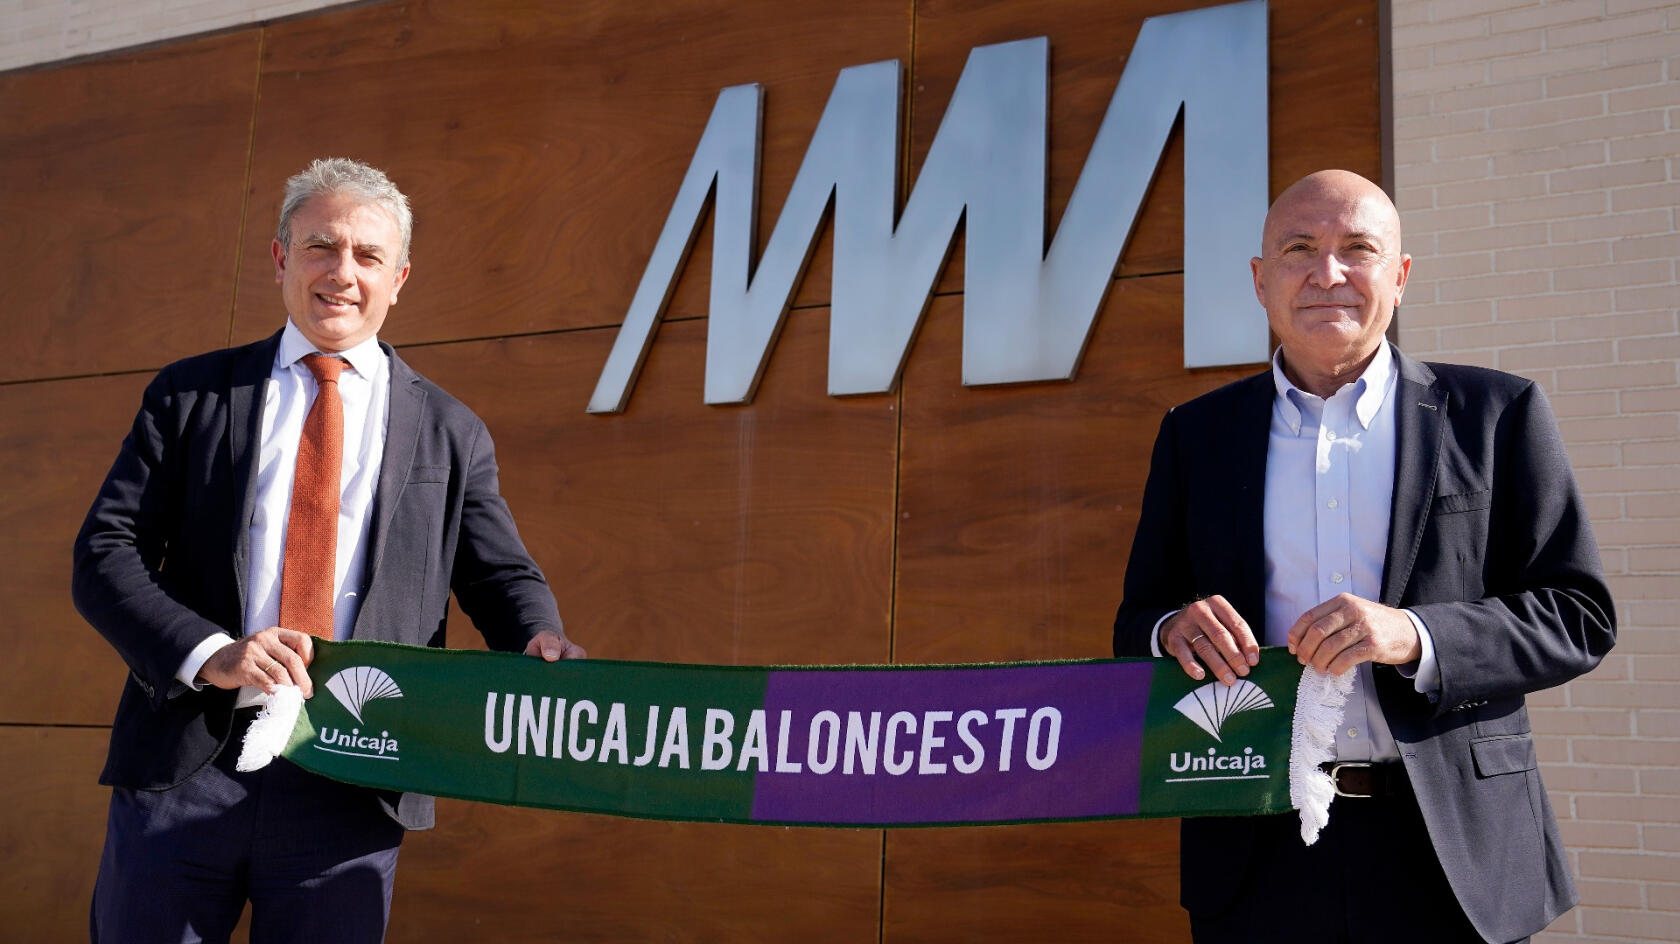 Unicaja Baloncesto keep travelling on Metro Málaga